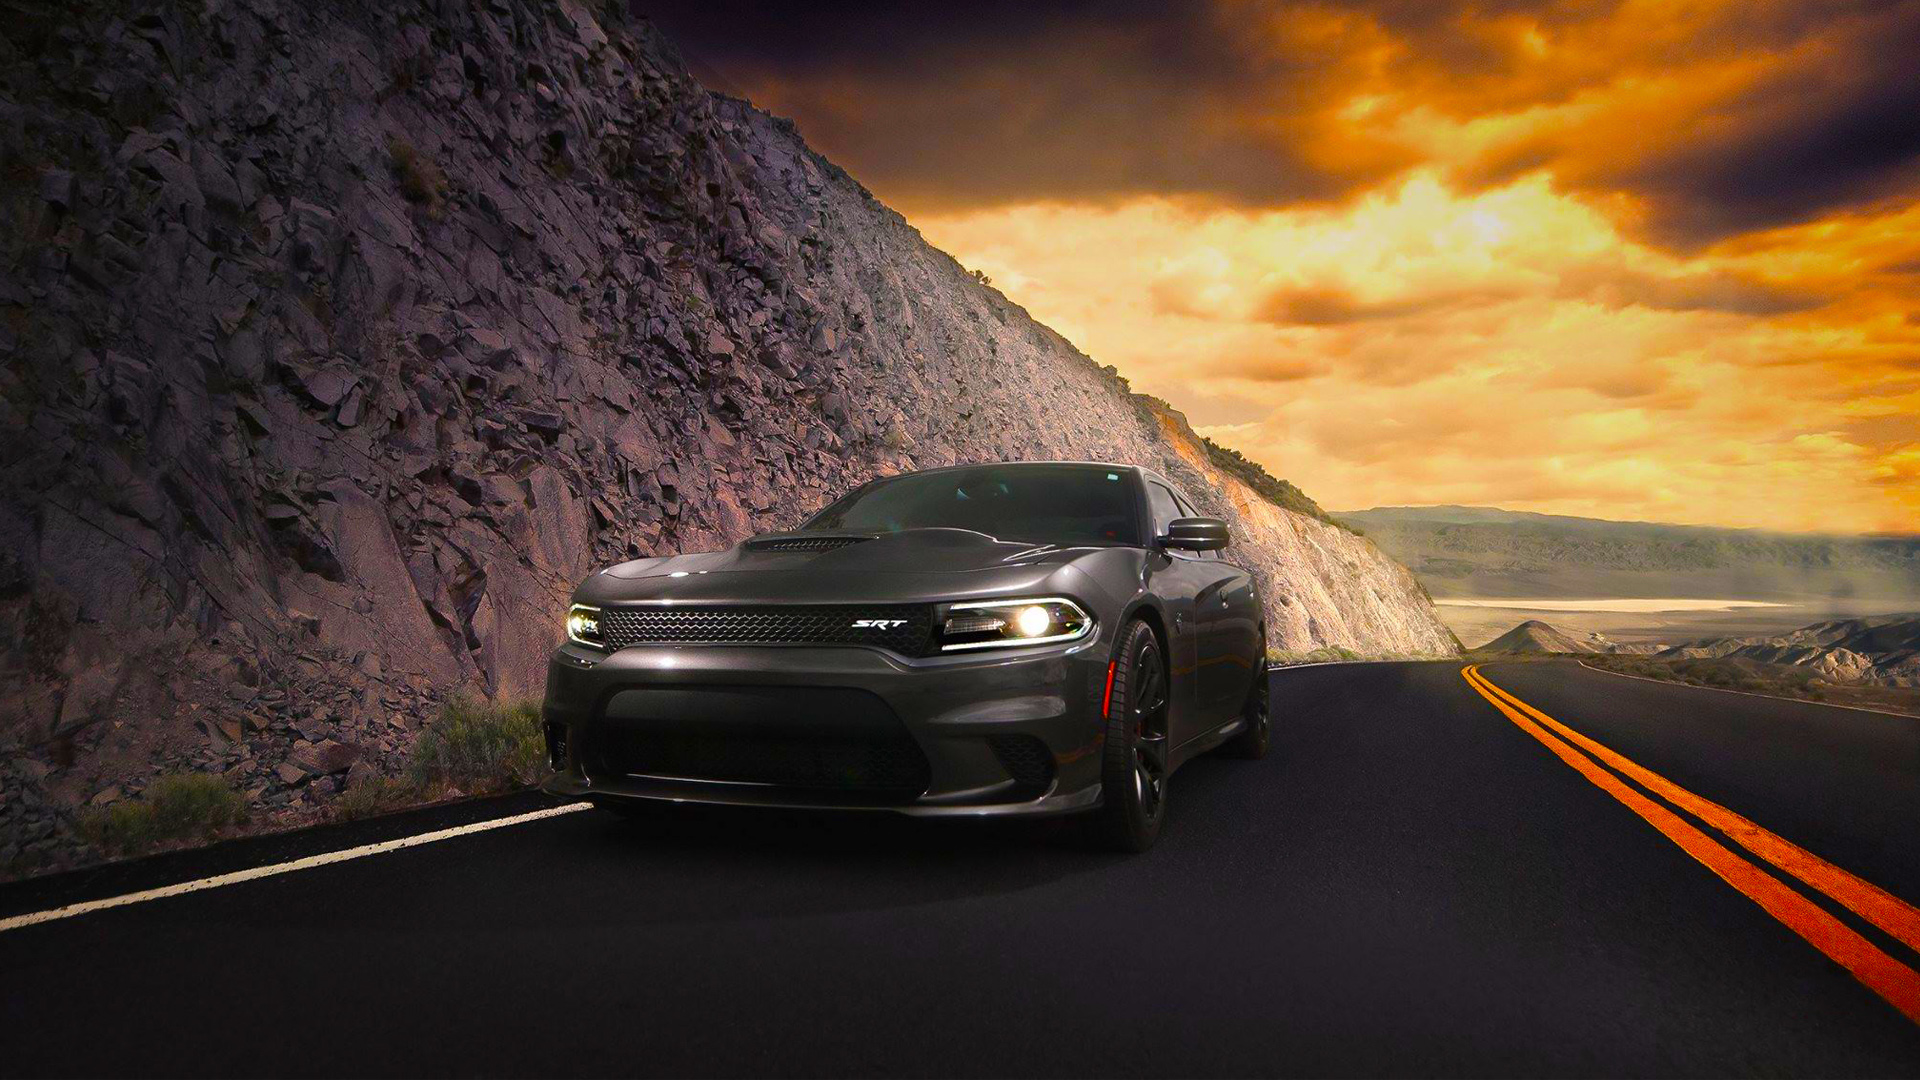 Dodge Charger SRT Hellcat 2015 Wallpaper | HD Car Wallpapers | ID #5379